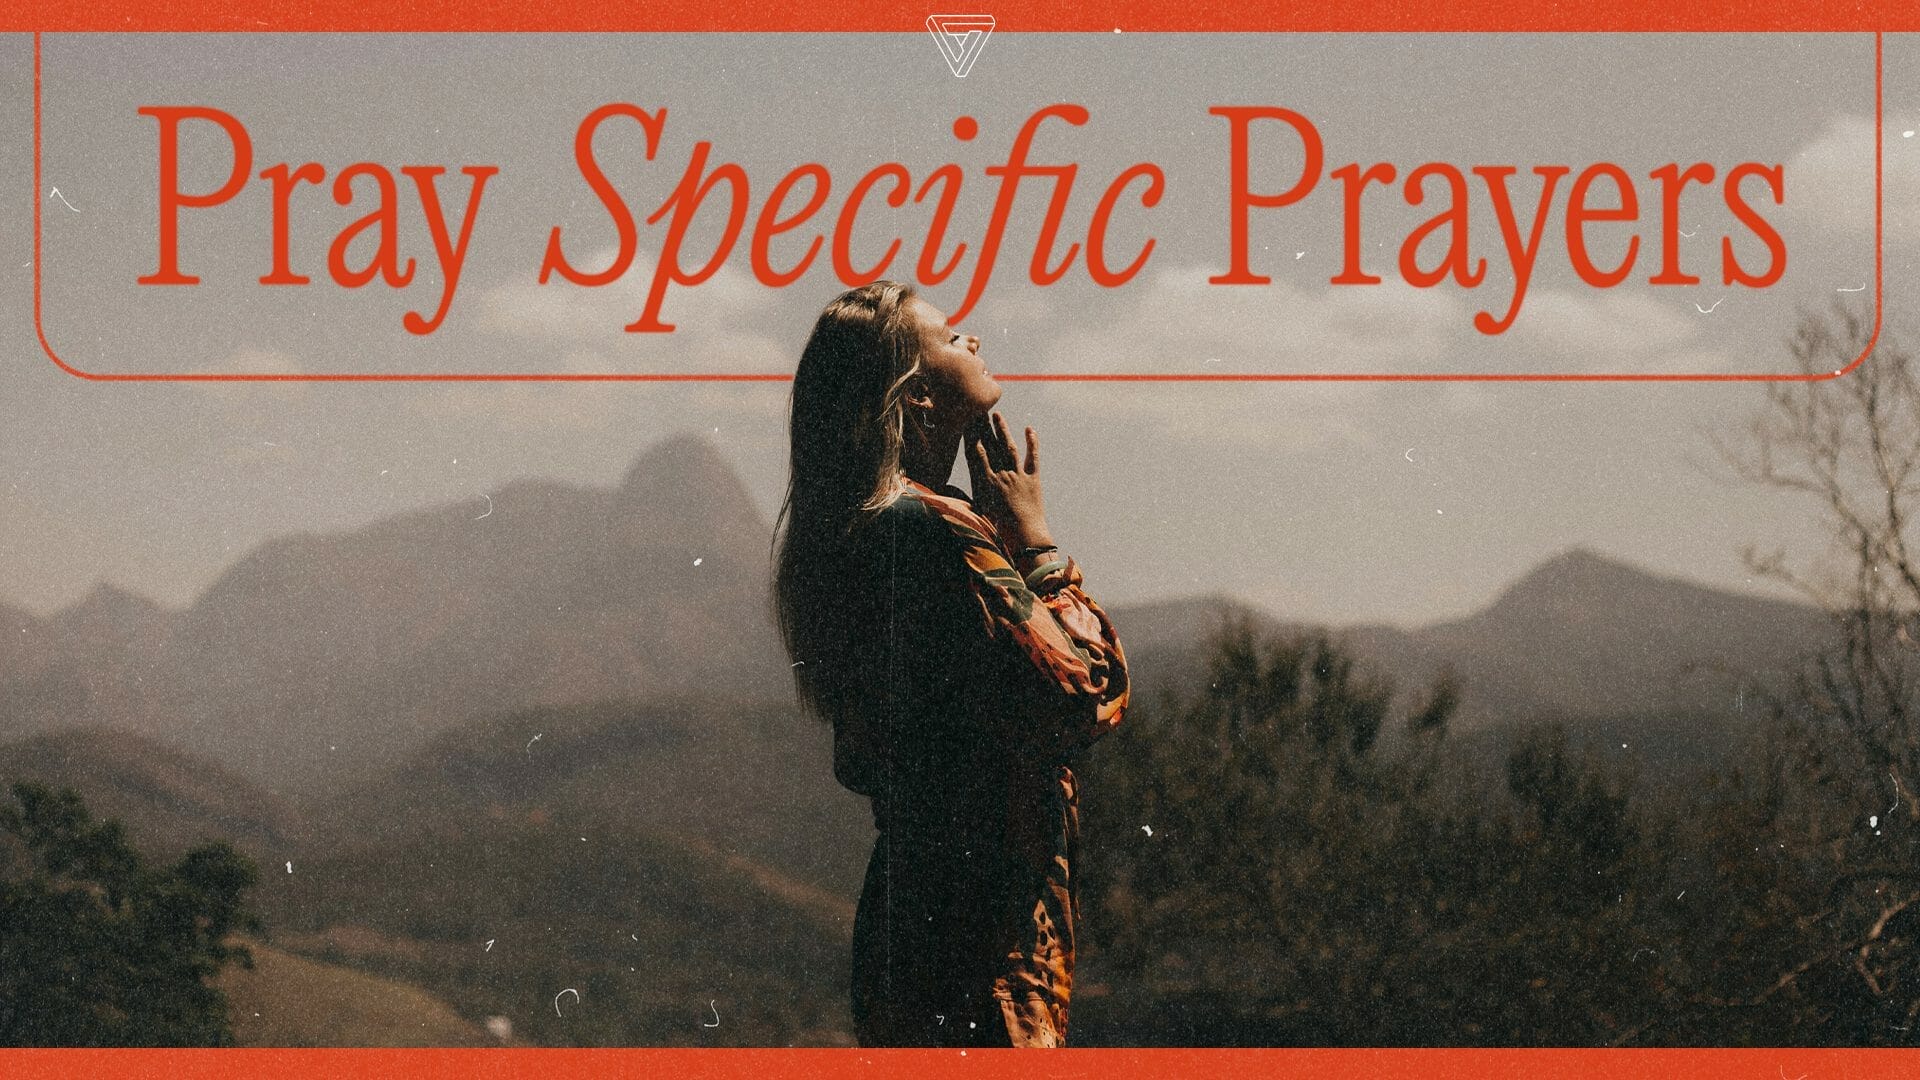 Pray specific prayers